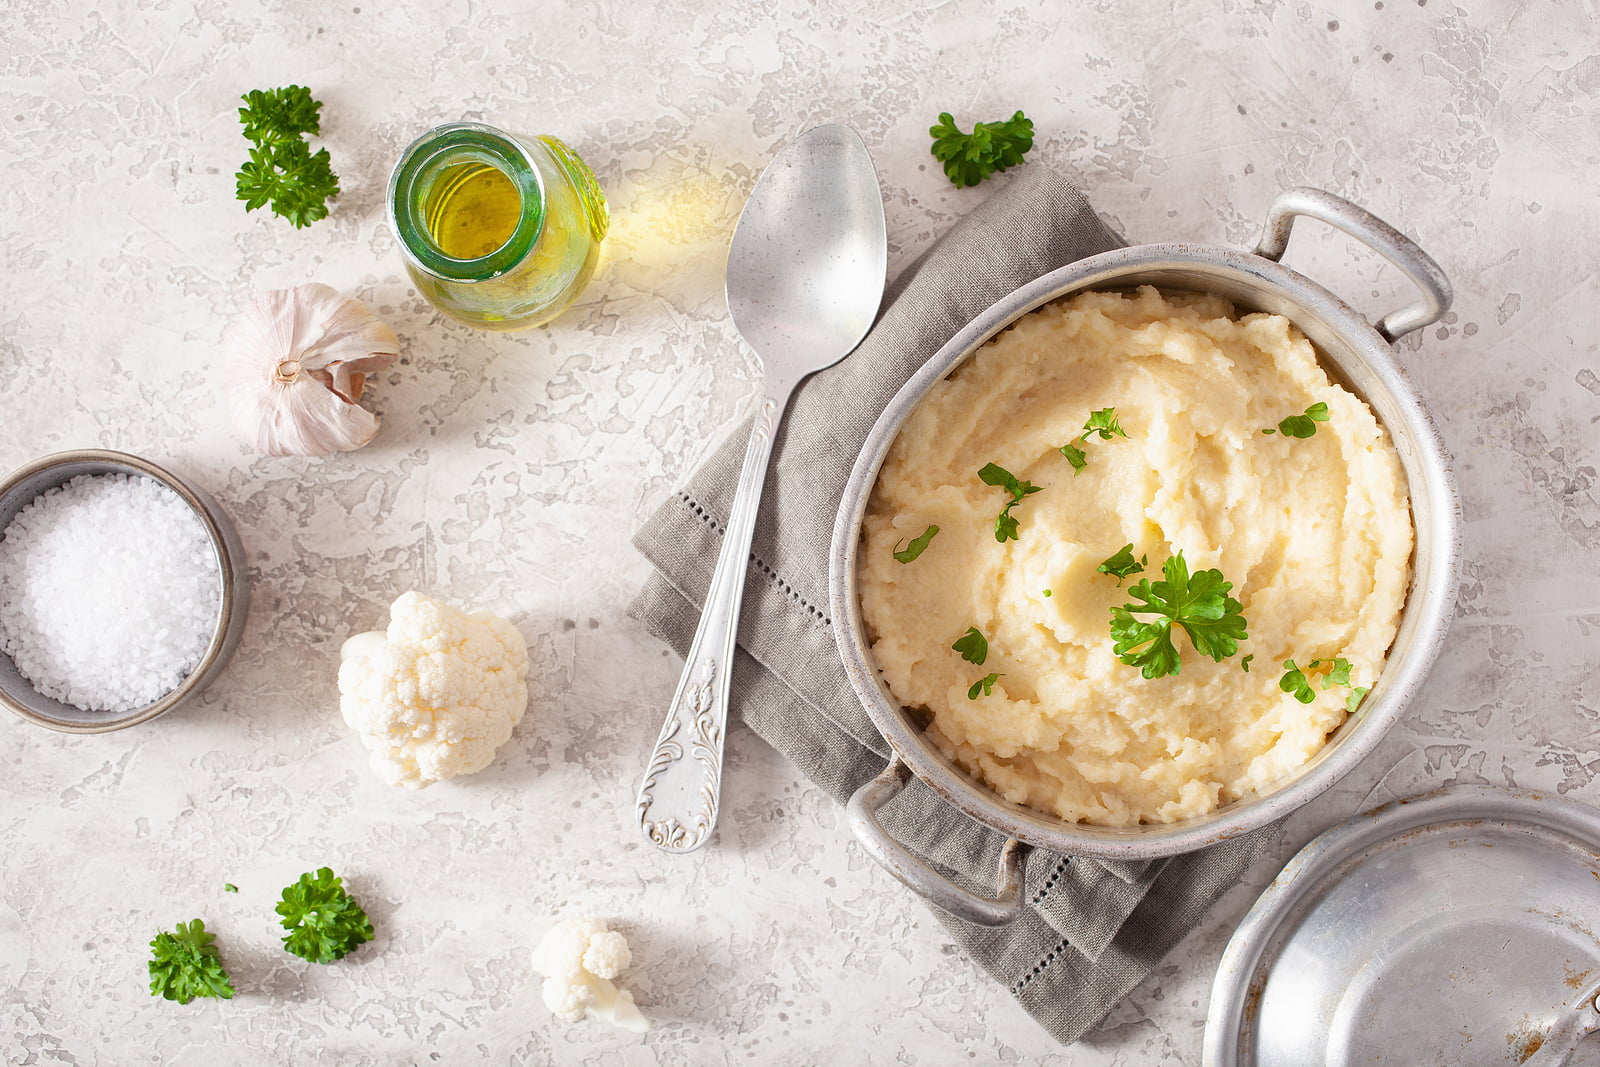 [RECIPE] Swap these garlic cauliflower mashed potatoes for starchy veggies